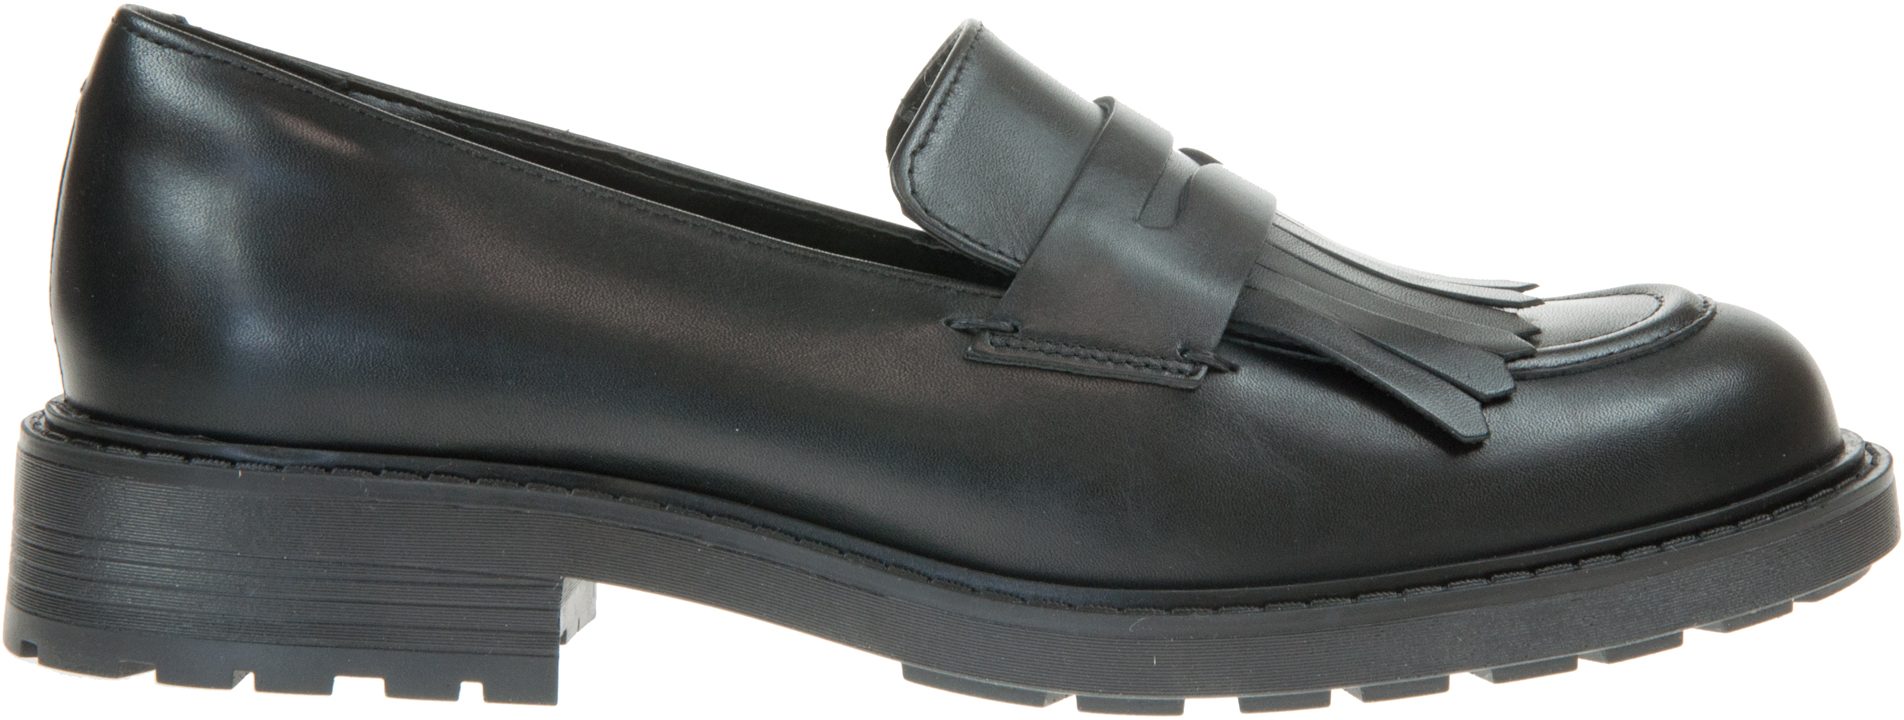 Clarks Orinoco 2 Loafer Black Hi-Shine Leather 26161665 - Everyday ...